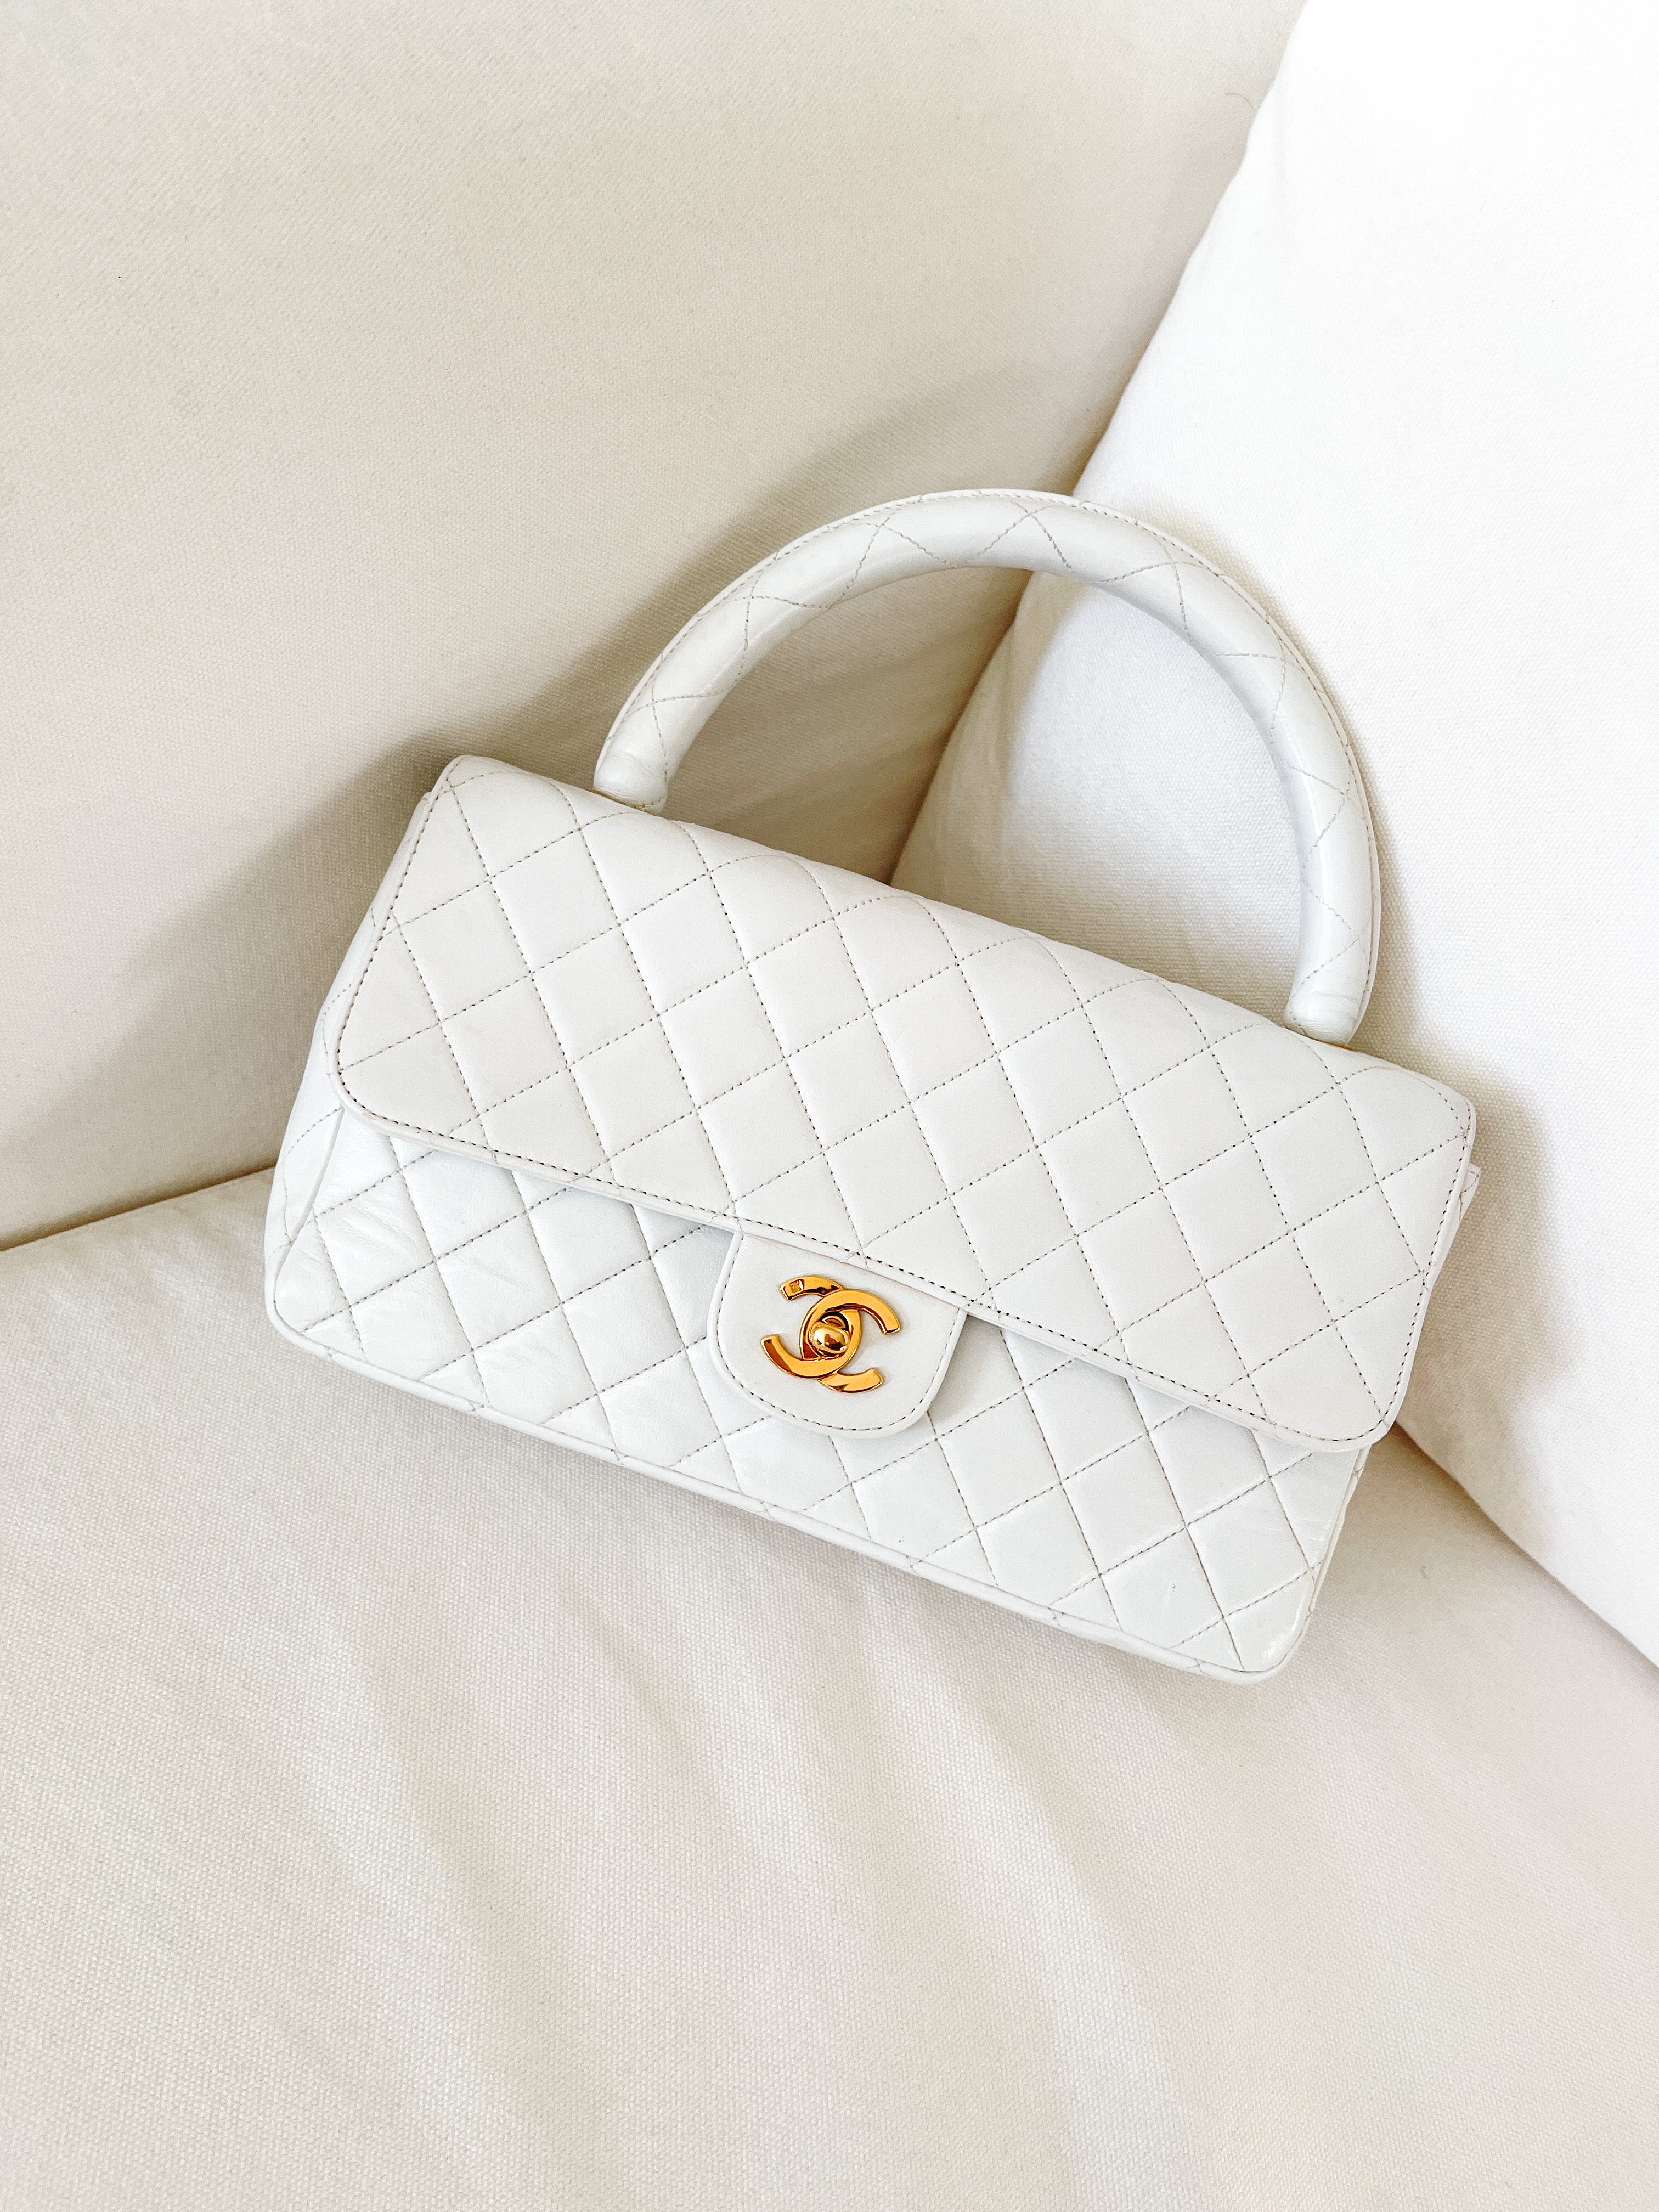 Chanel classic flap handbag - Gem